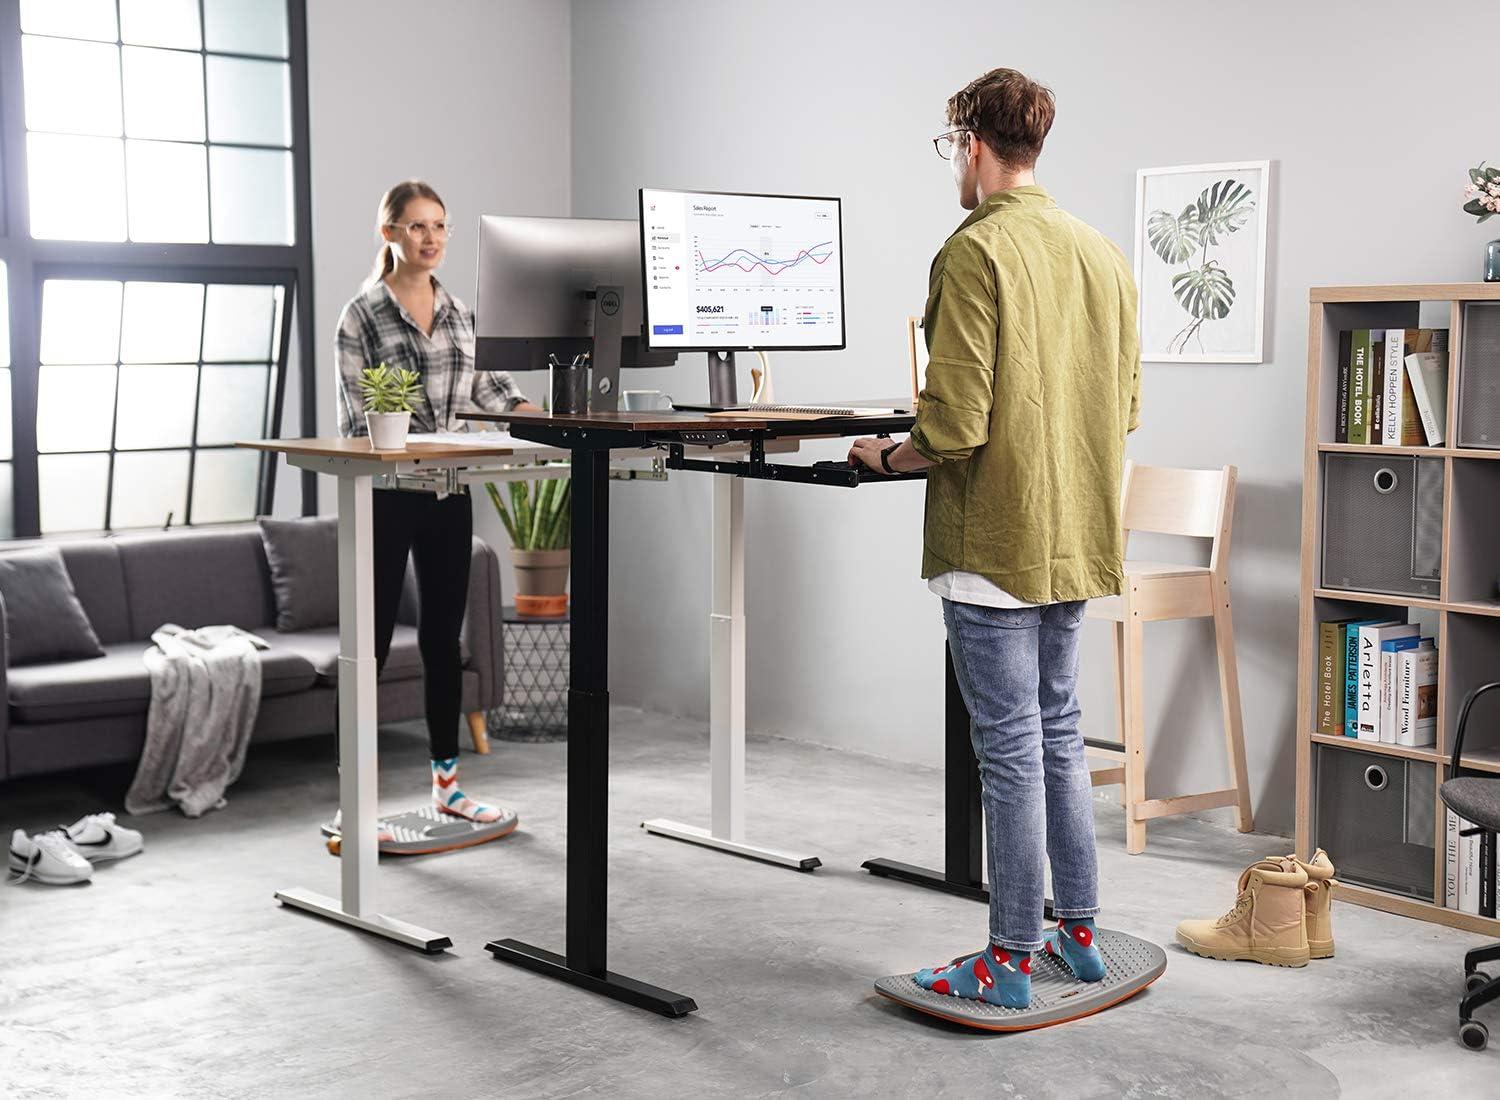 FEZIBO Standing Desk Mat with Anti Fatigue Bar, Wooden Wobble Balance Board  with Ergonomic Design Comfort Floor Mat Large Altostratus Gray